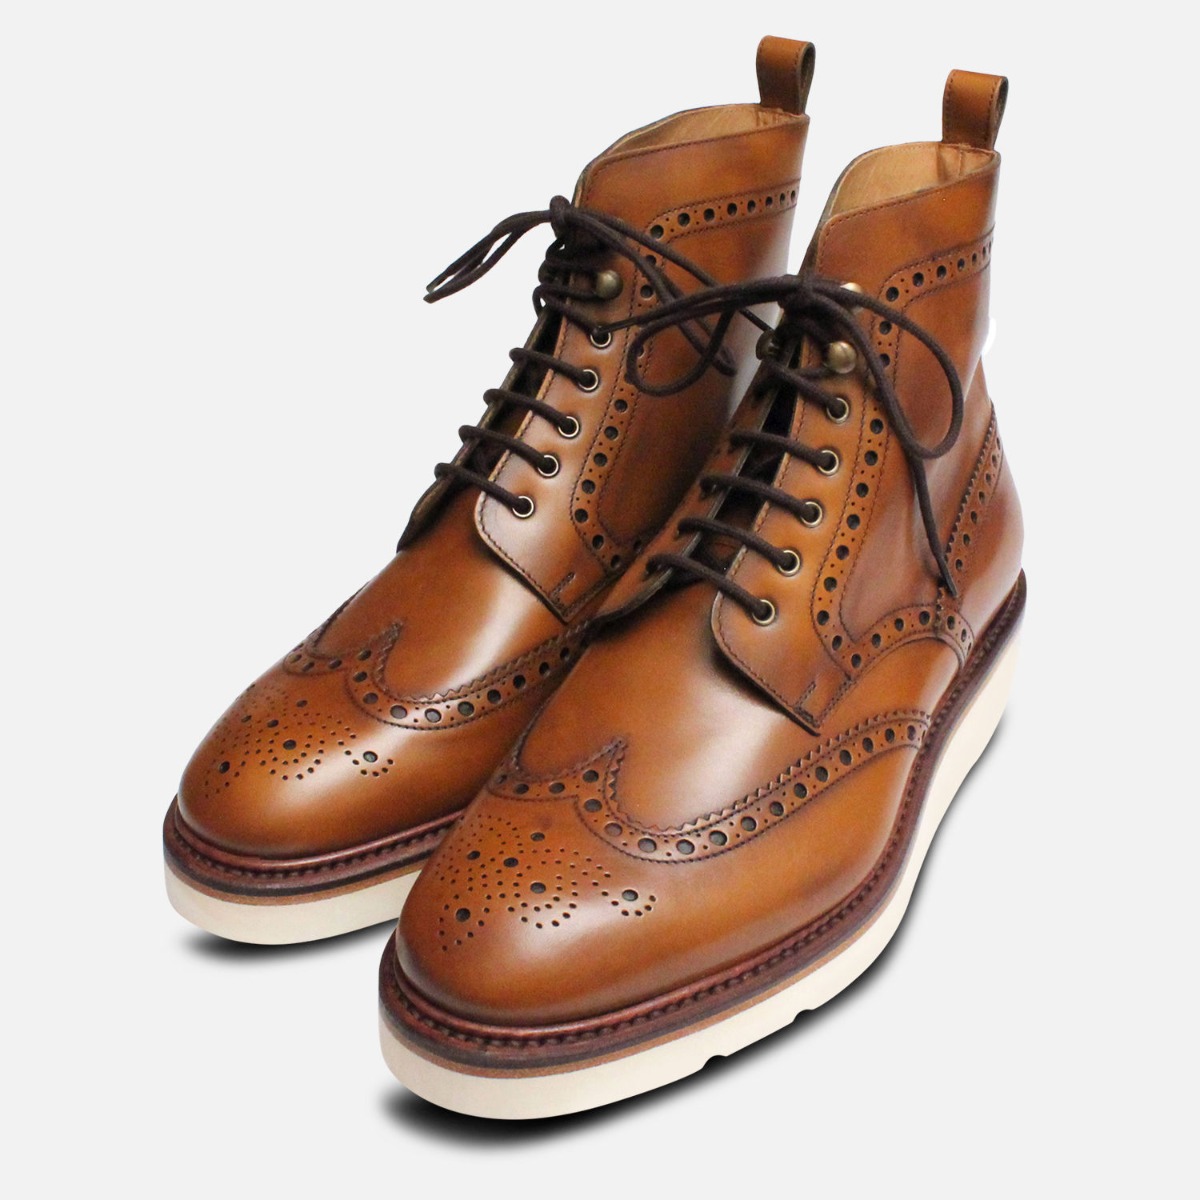 Designer Italian Brogue Boots Goodyear Vibram Sole | eBay